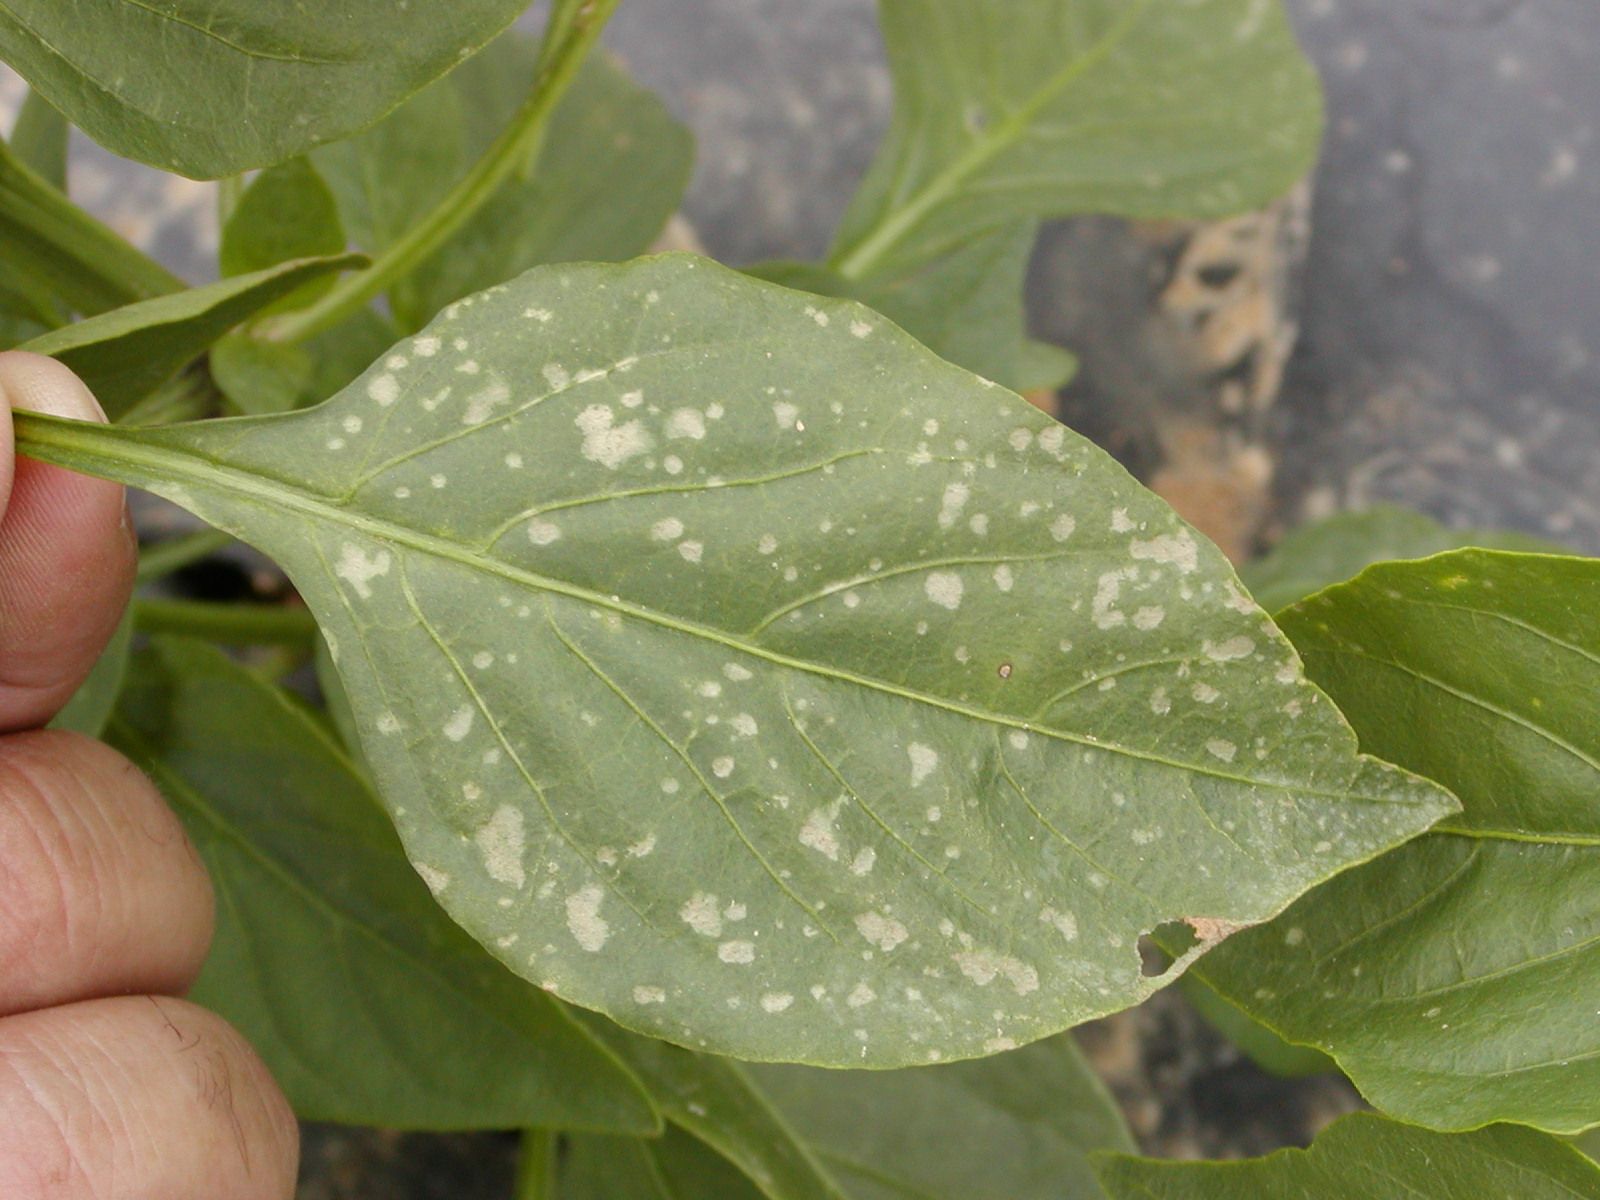 Gramoxone (paraquat) damage to pepper foliage.